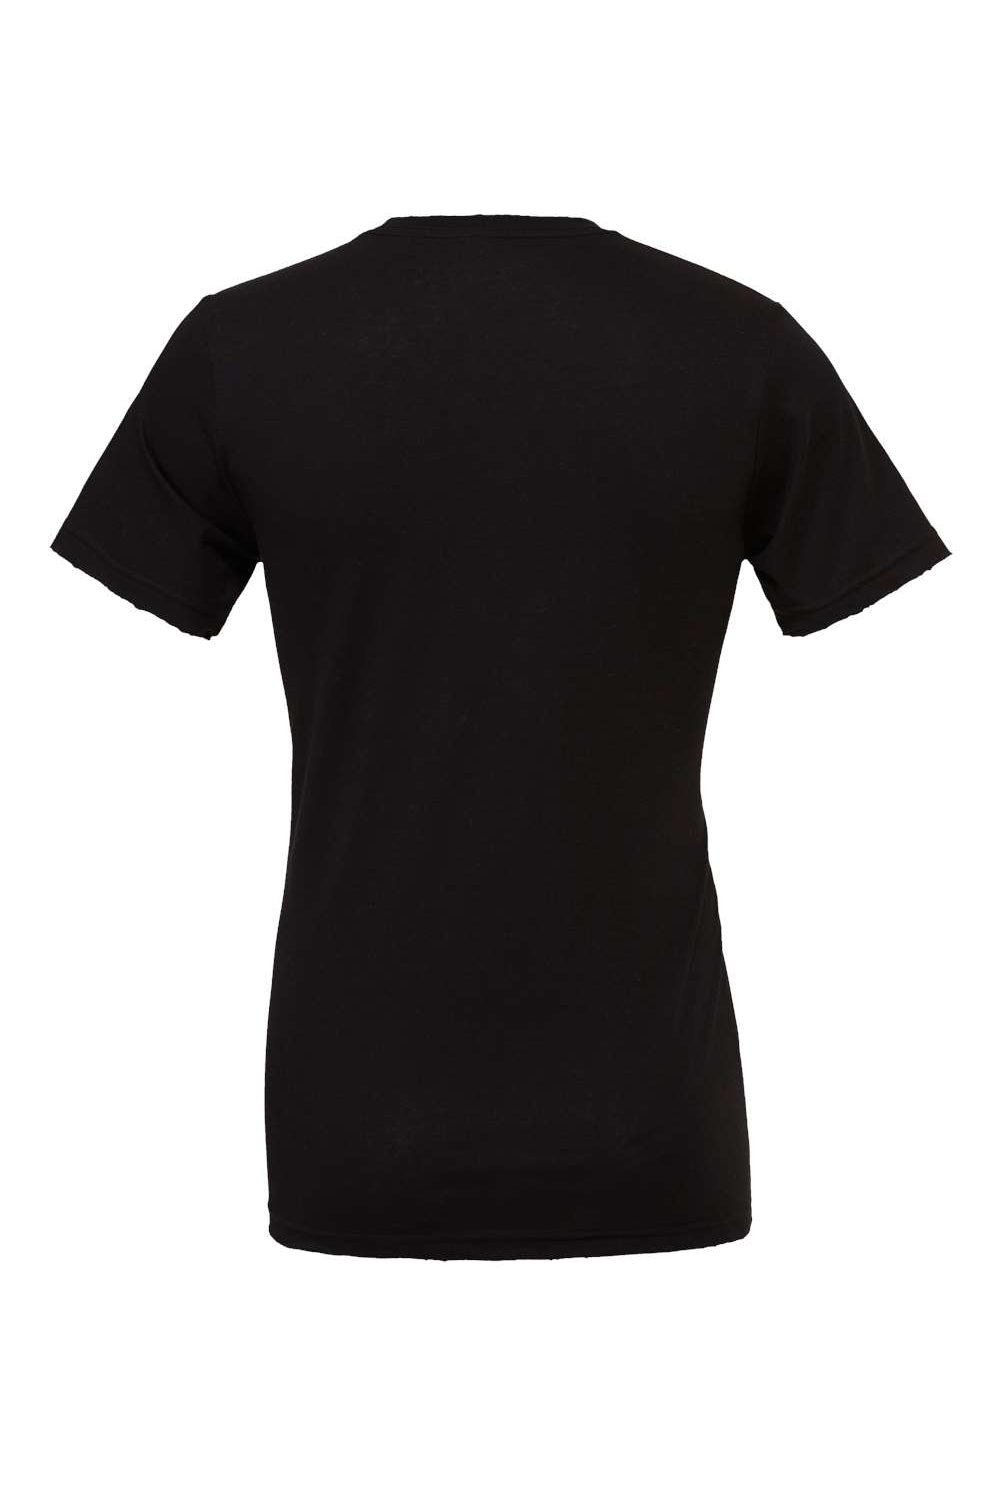 Bella + Canvas BC3001/3001C Mens Jersey Short Sleeve Crewneck T-Shirt Black Flat Back